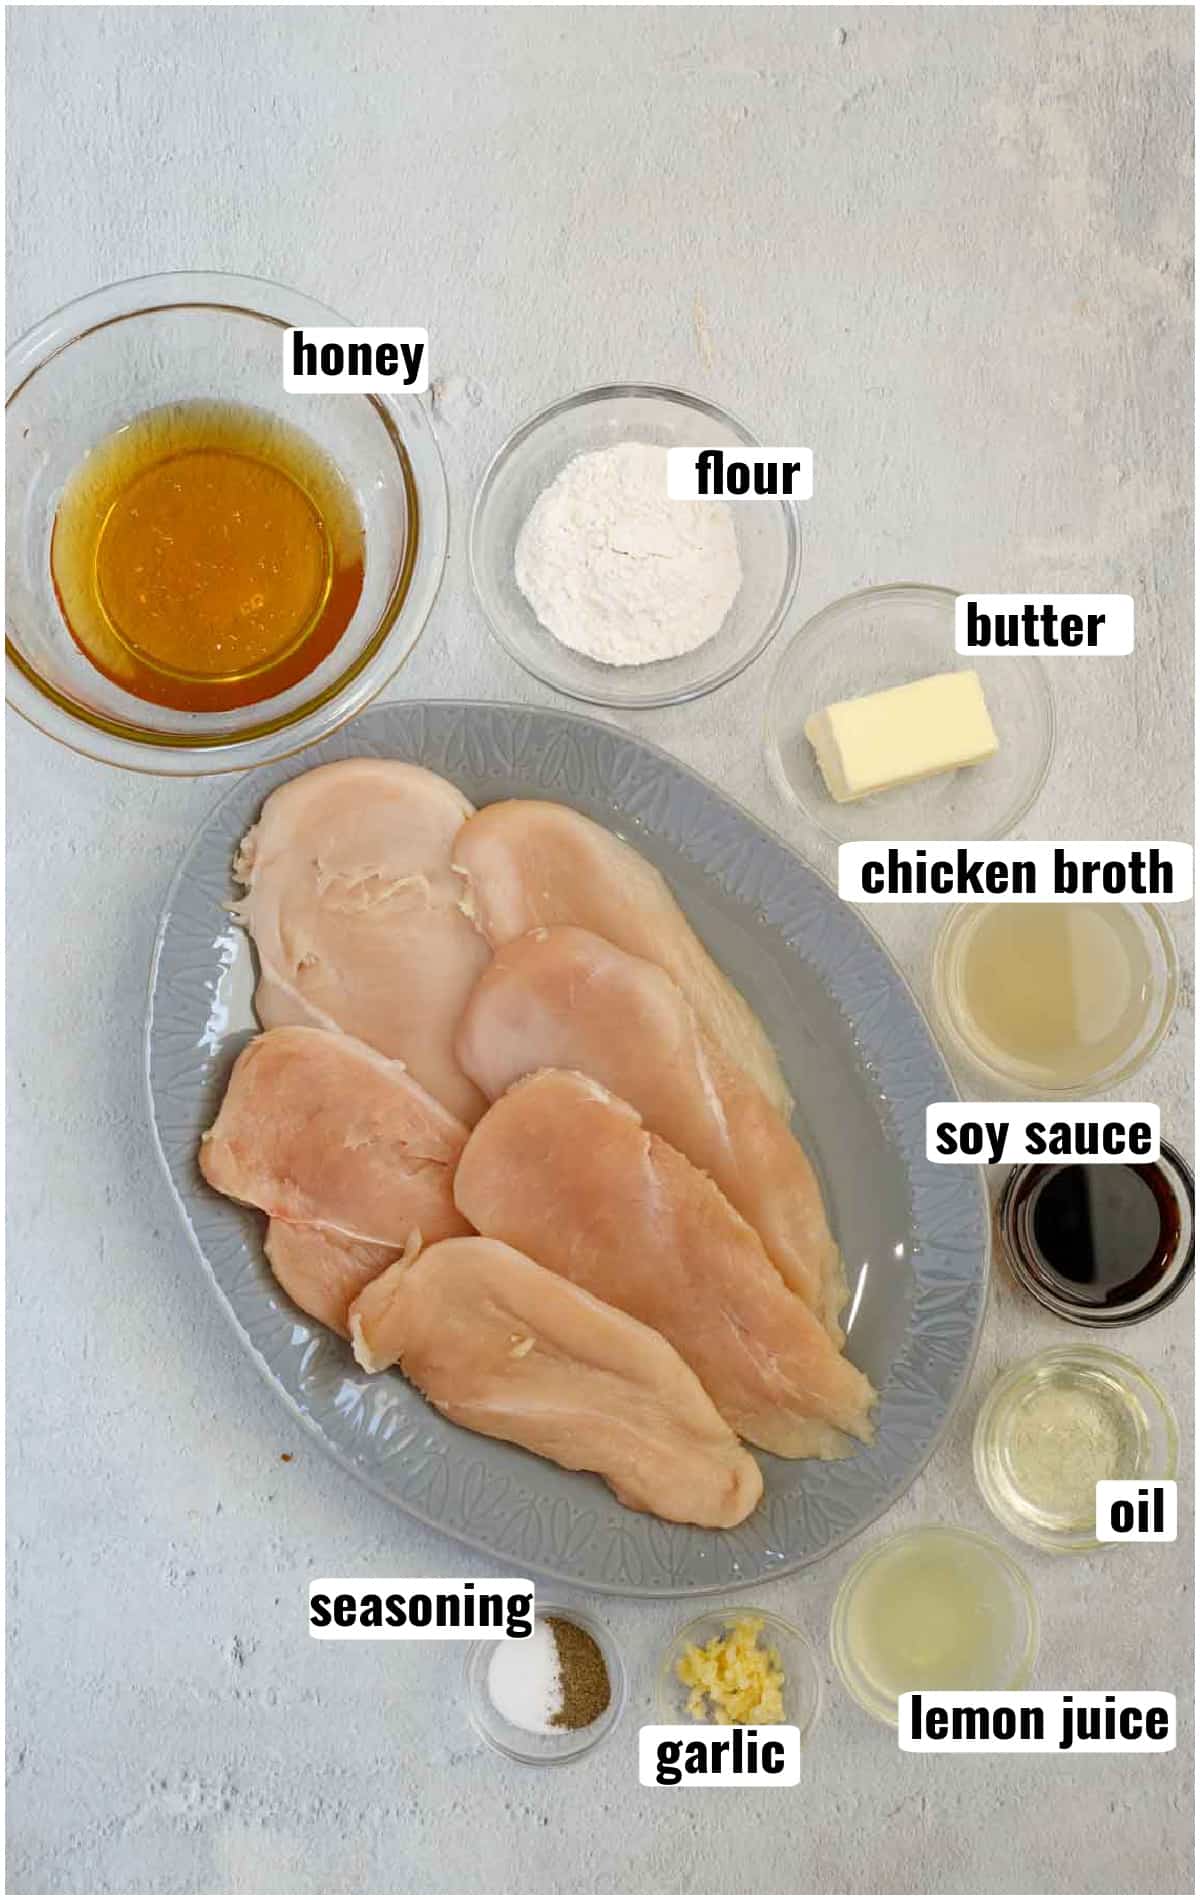 All ingredients needed to make honey chicken.